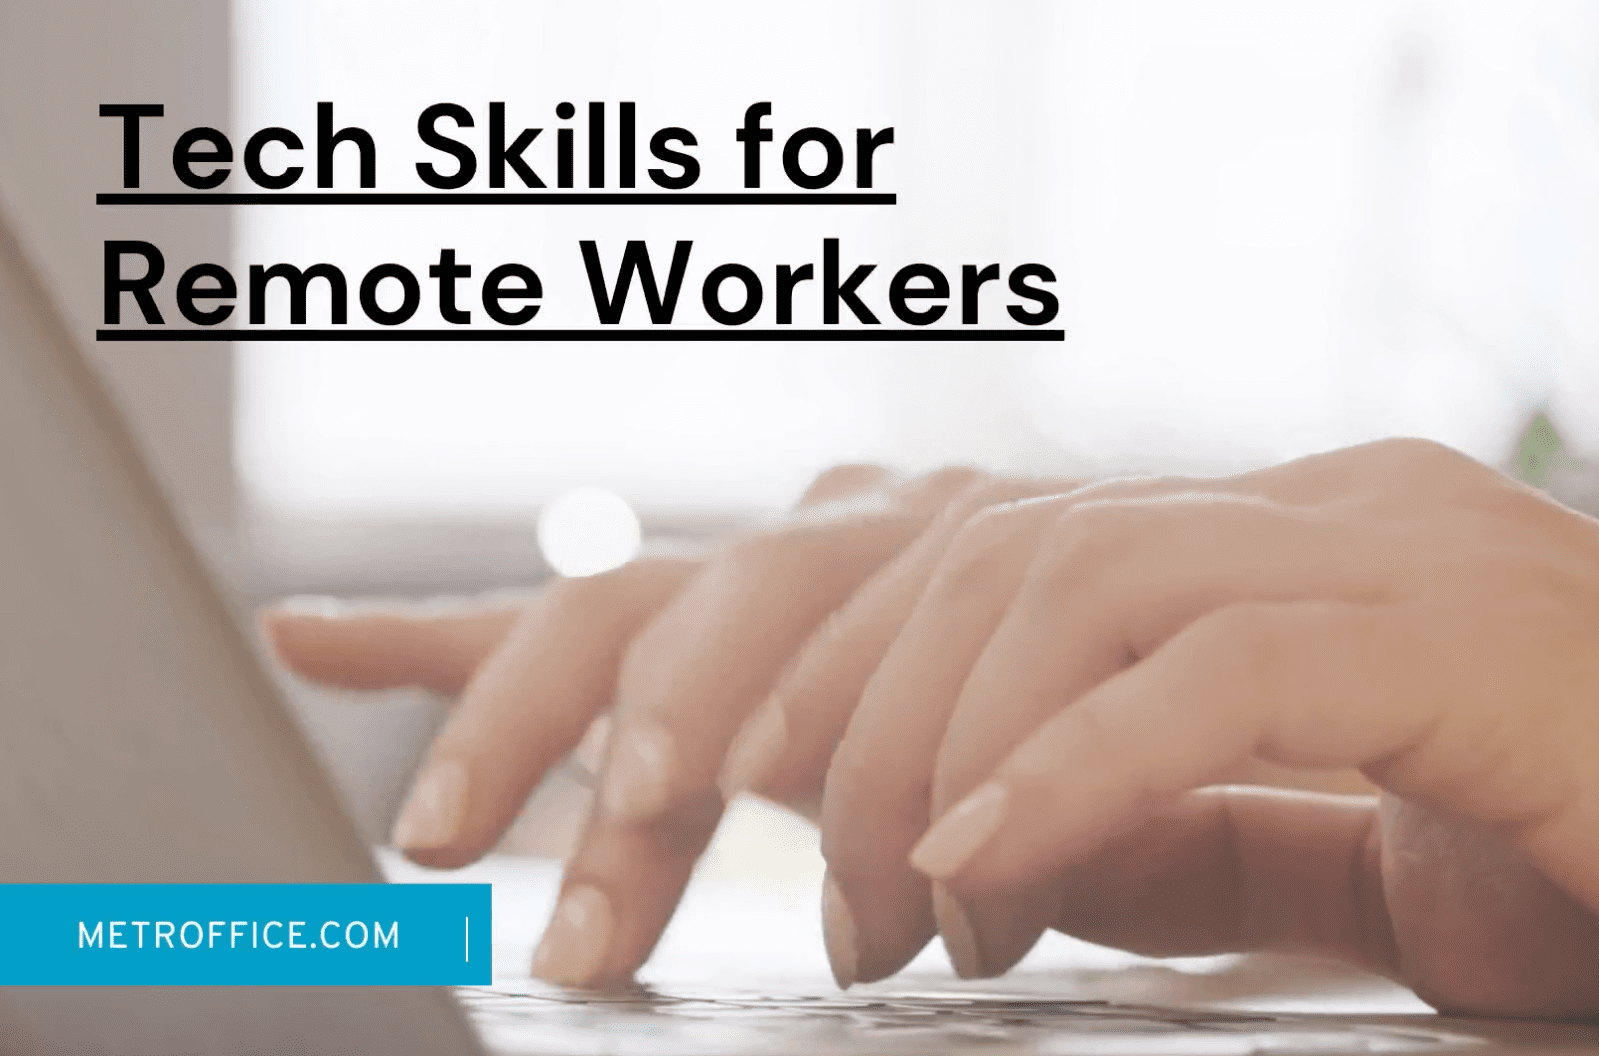 Master Tech Skills to Master Remote Work